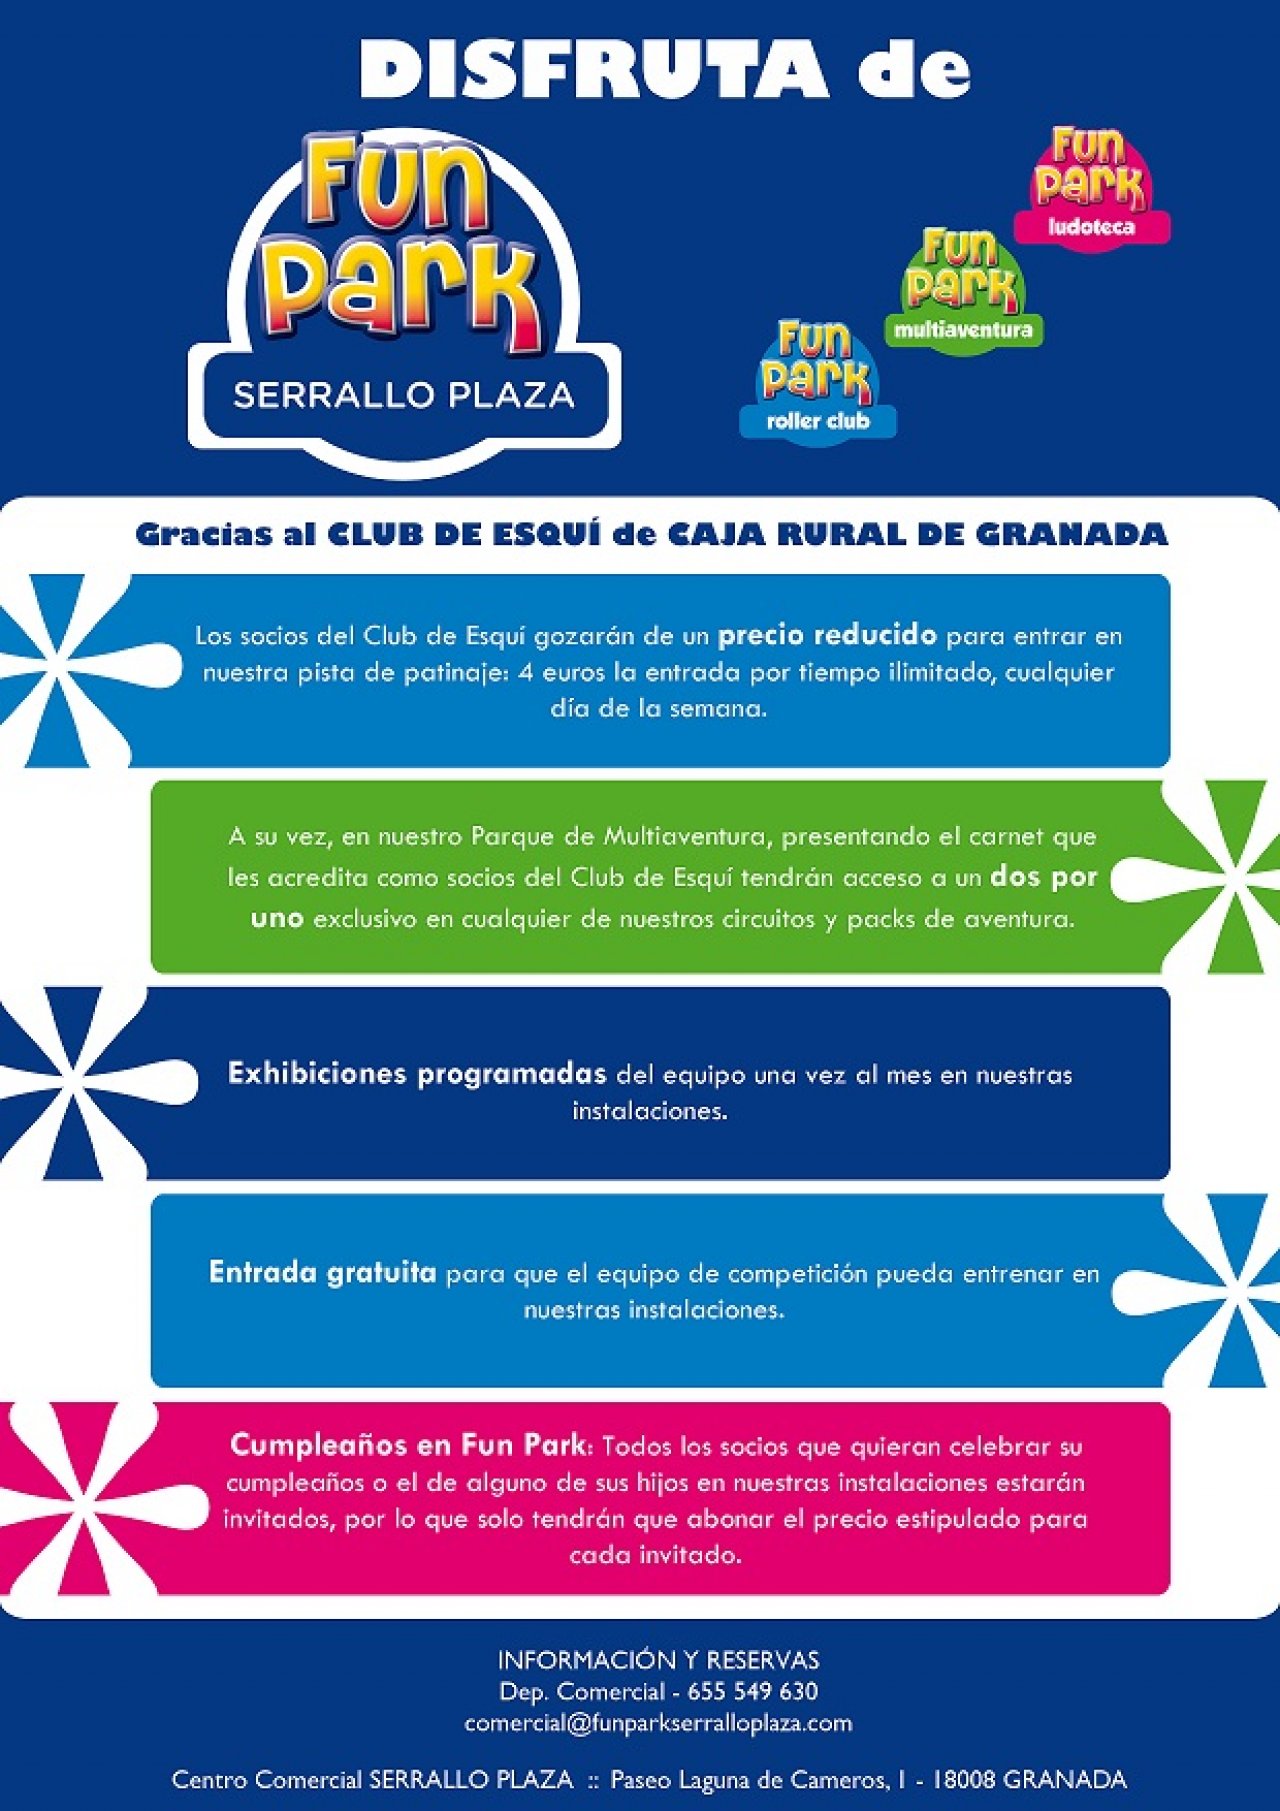 Fun Park (Centro Comercial Serrallo Plaza)